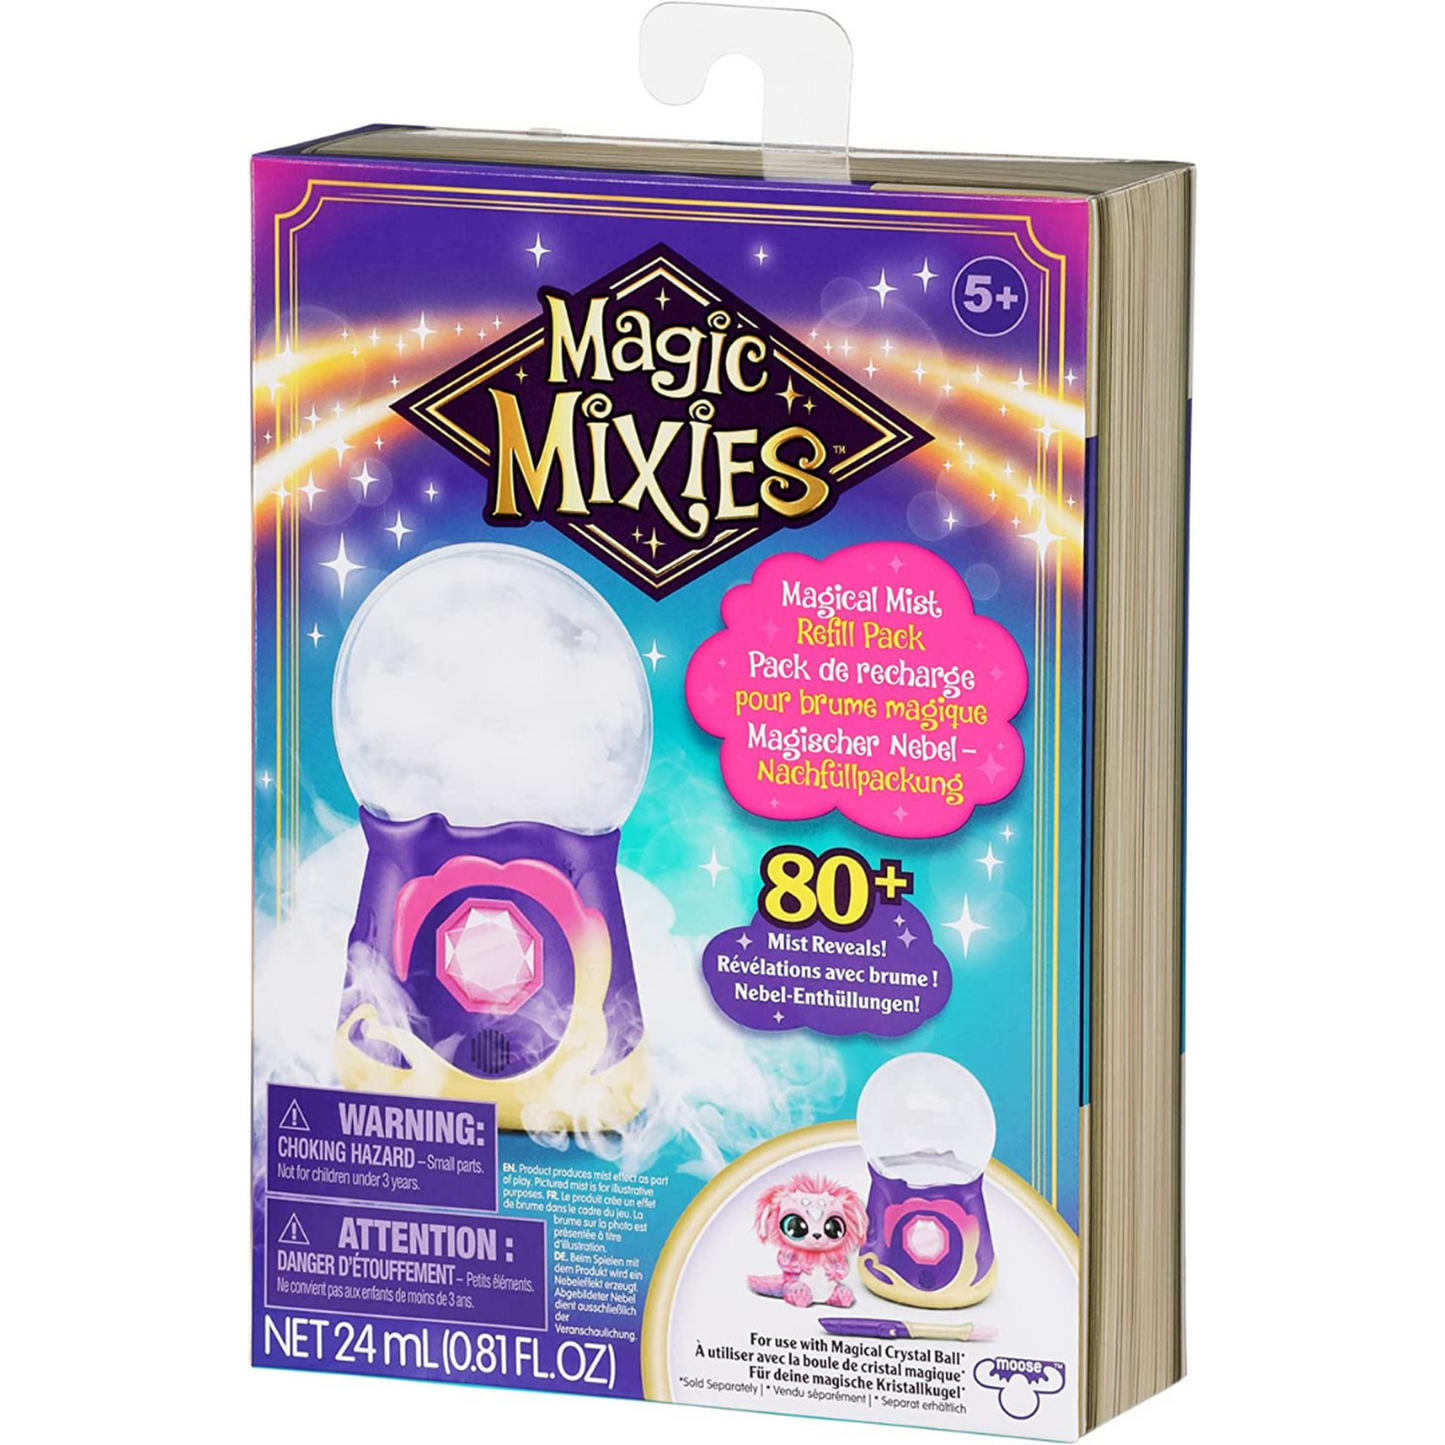 Magic Mixies Magical Mist Refill Pack